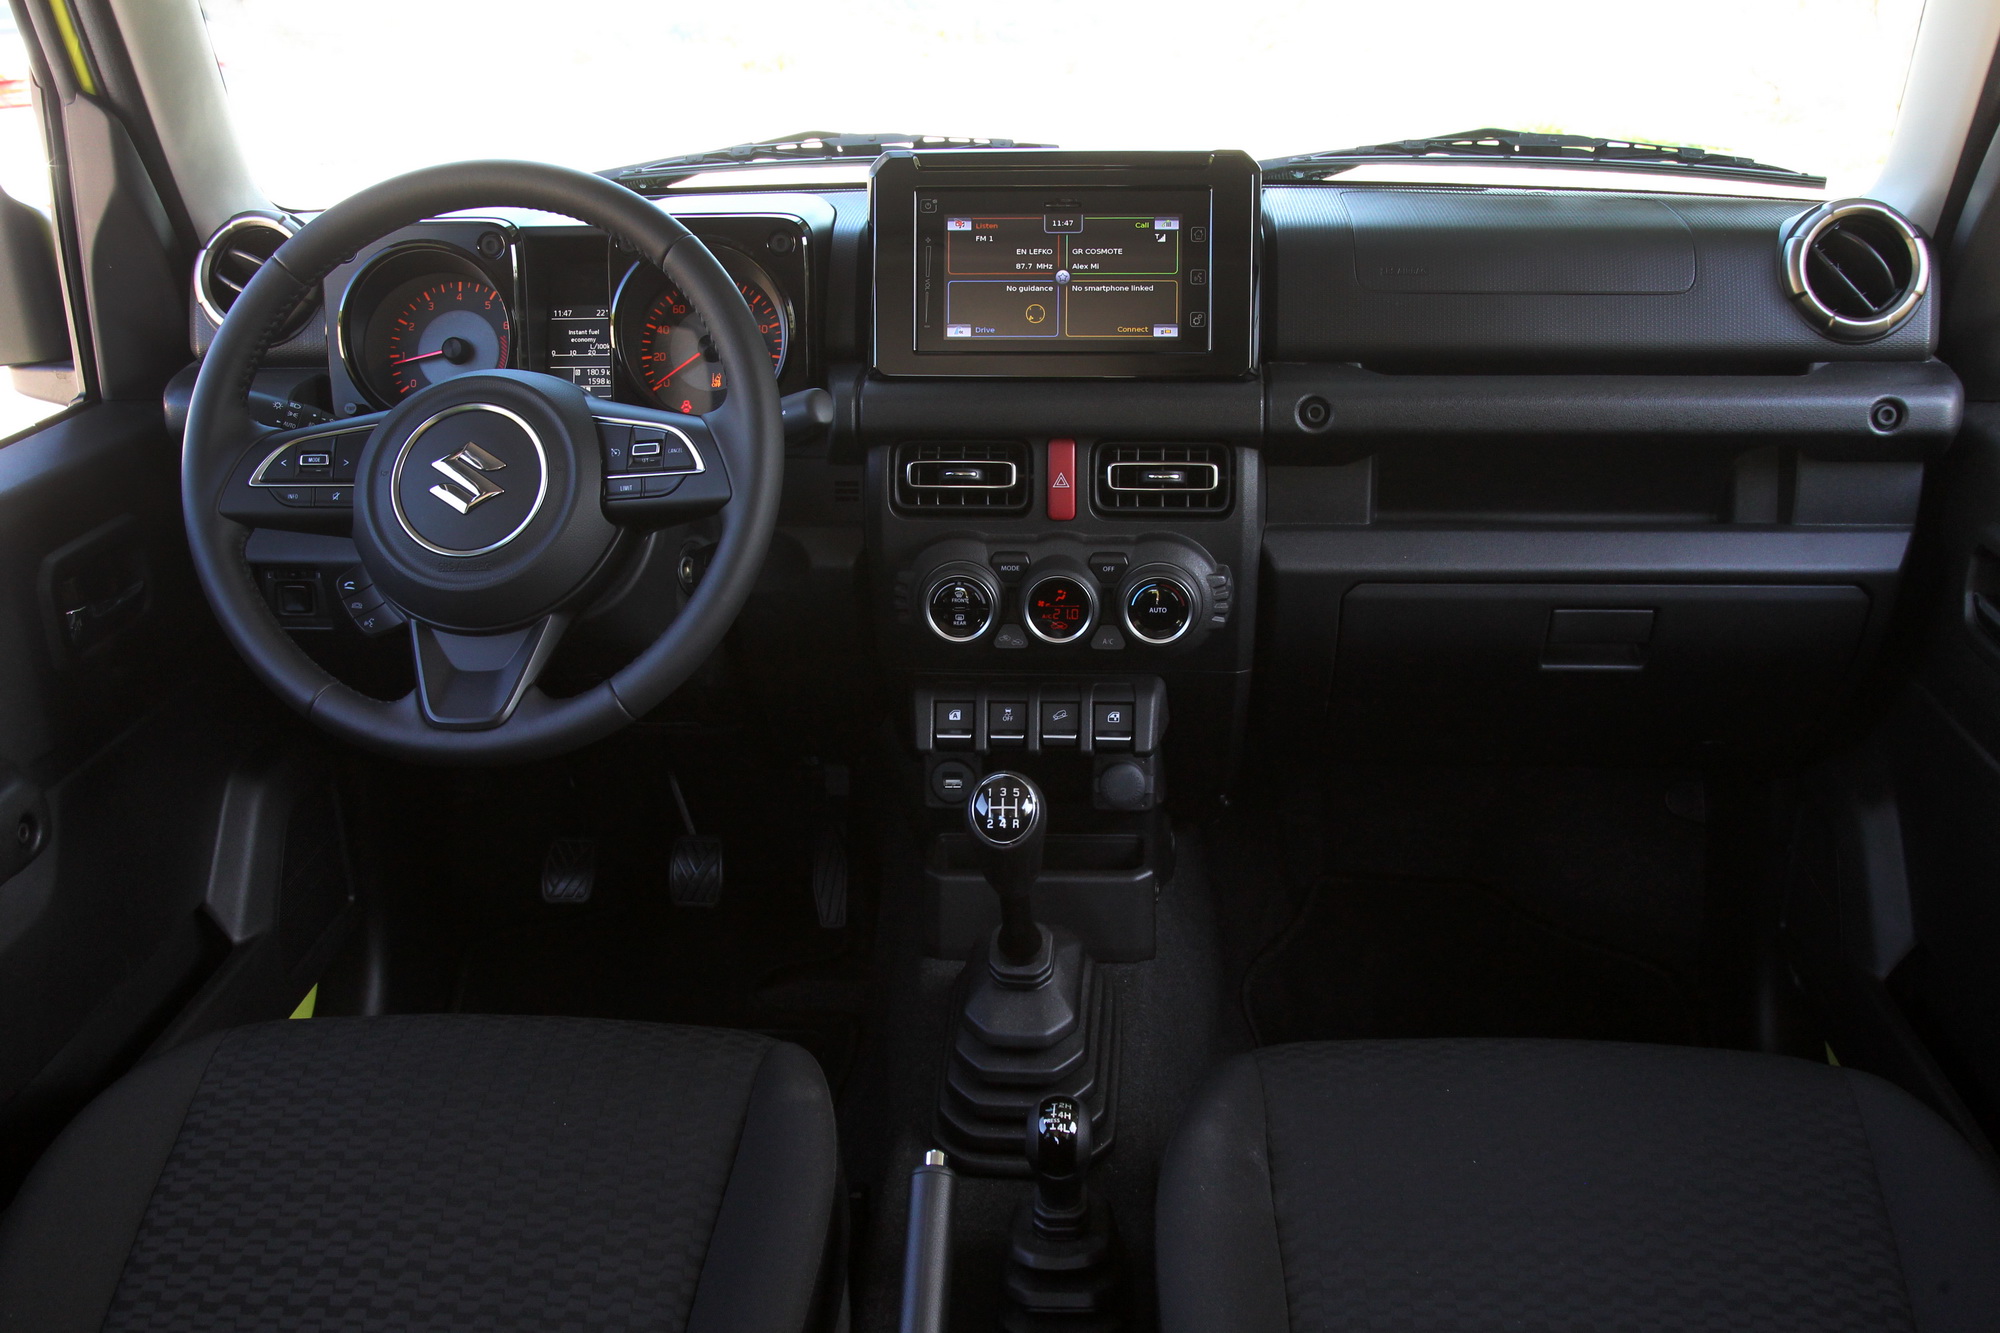 Test drive: Suzuki Jimny